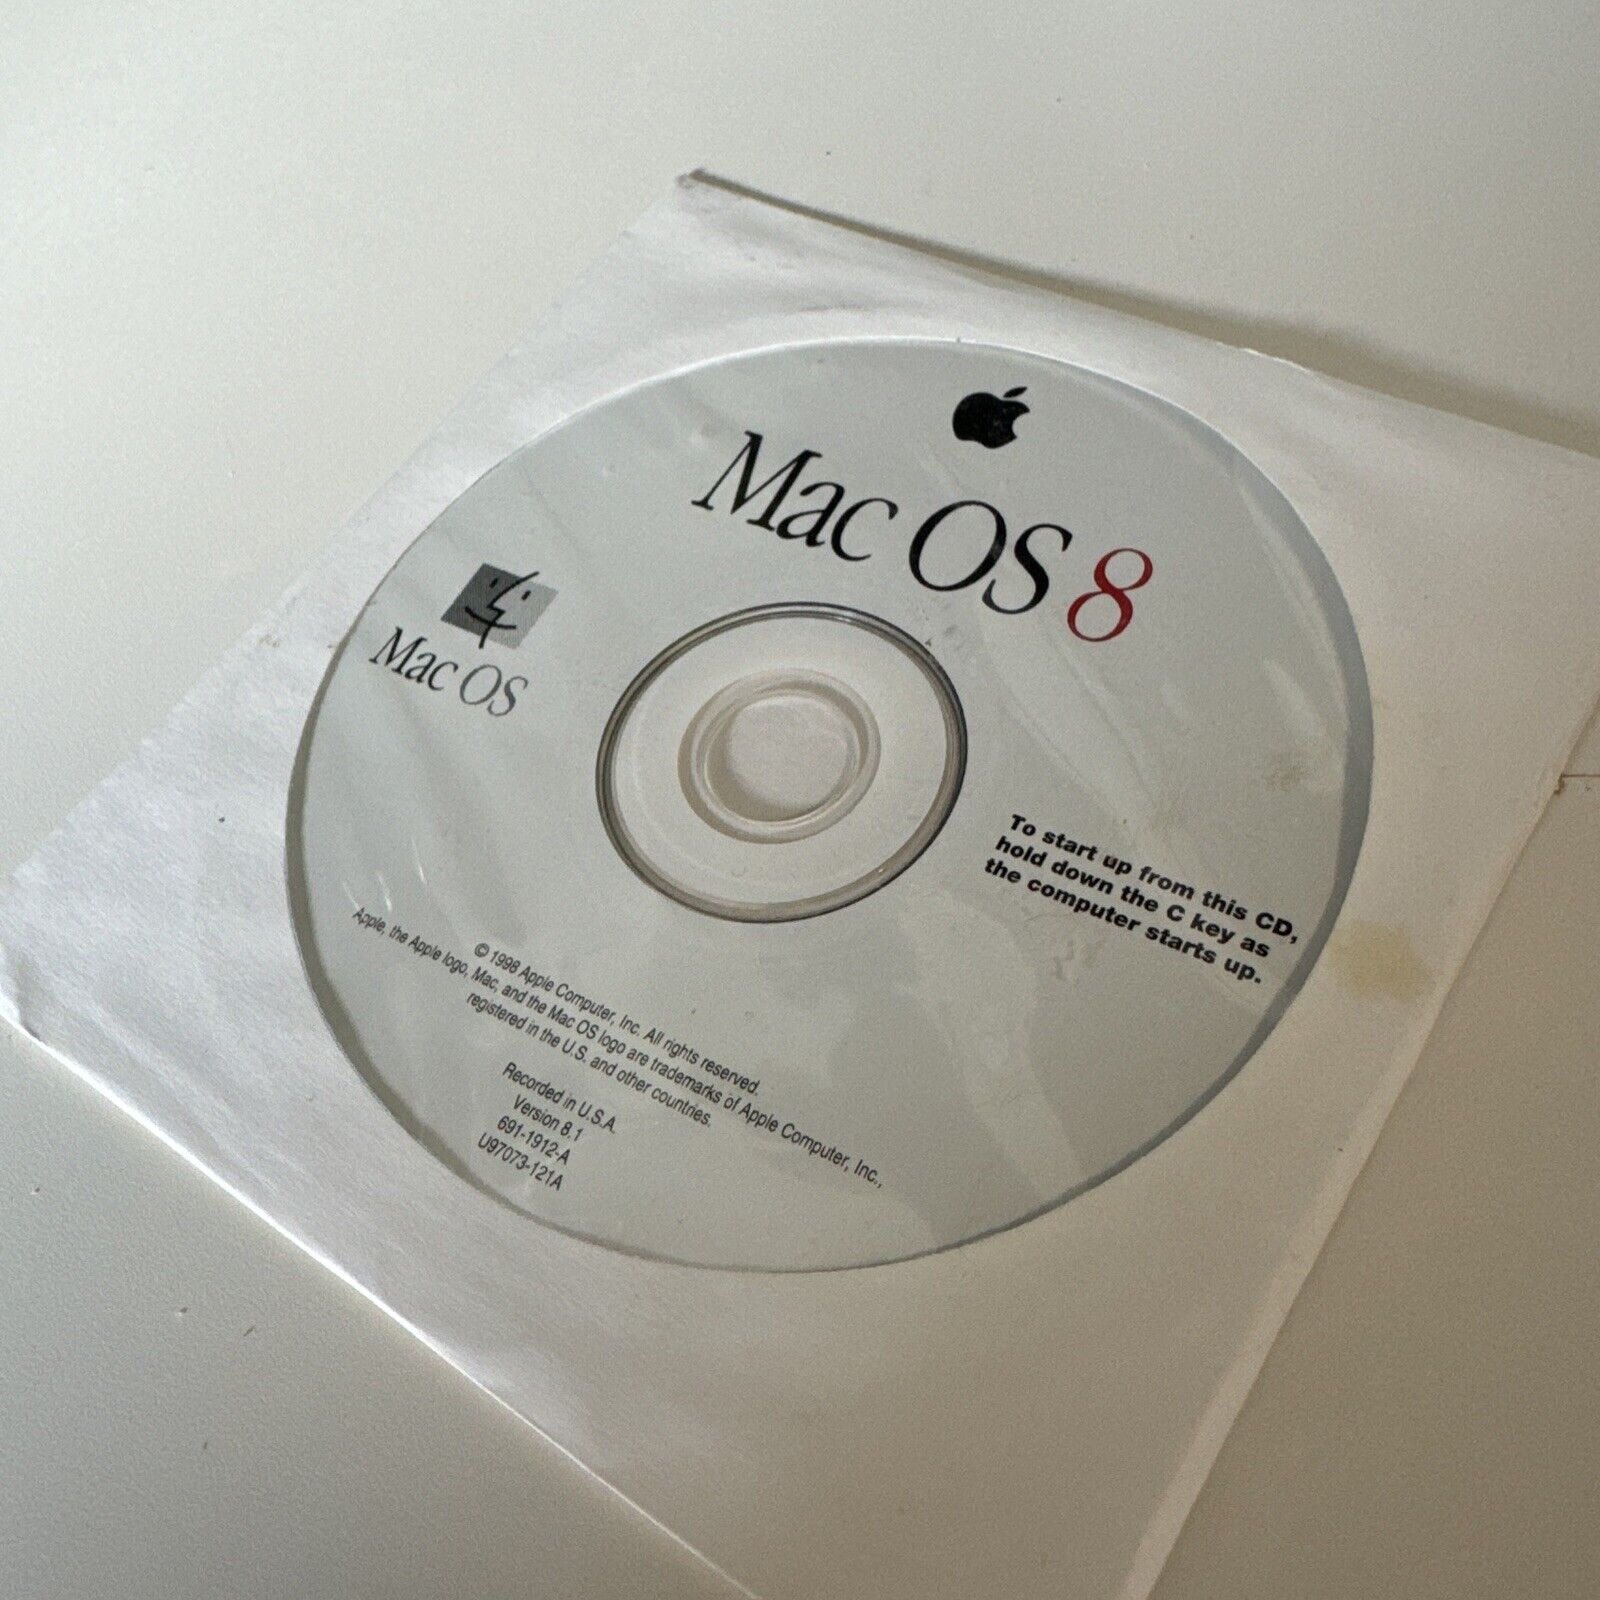 1998 Mac OS 8 CD Version 8.1 Disk Macintosh Software Install  691-1912-A